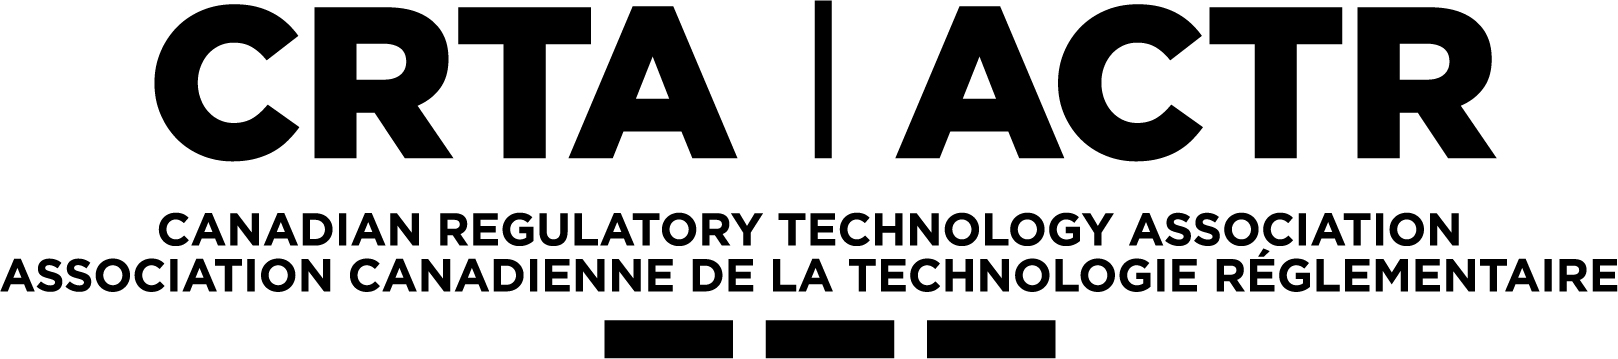 CRTA | Canadian Regulatory Technology Association